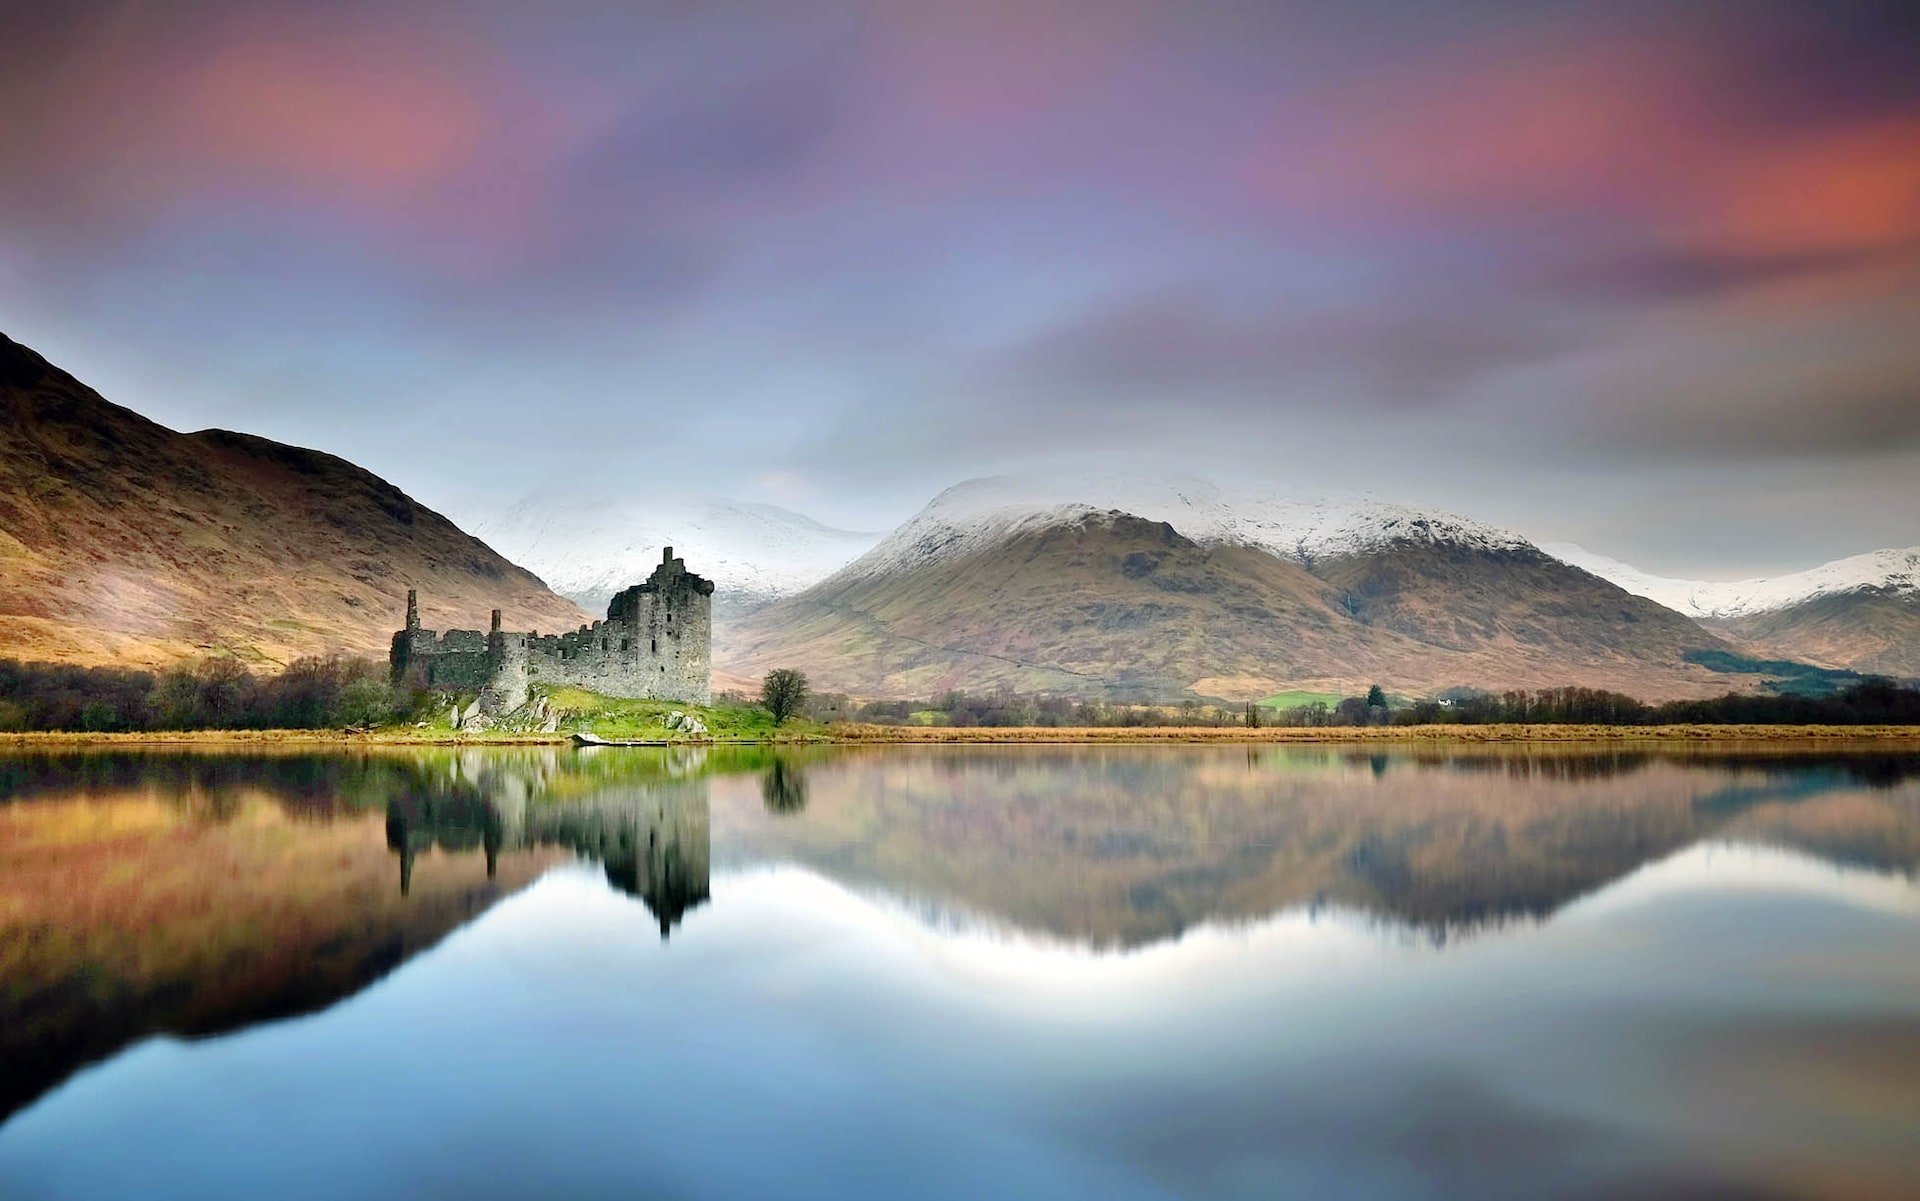 Scotland is beautiful. Лохнесс Шотландия. Замок Килхурн, Шотландия. Озеро Лохнесс в Шотландии. Озеро лох-Несс в Шотландии.